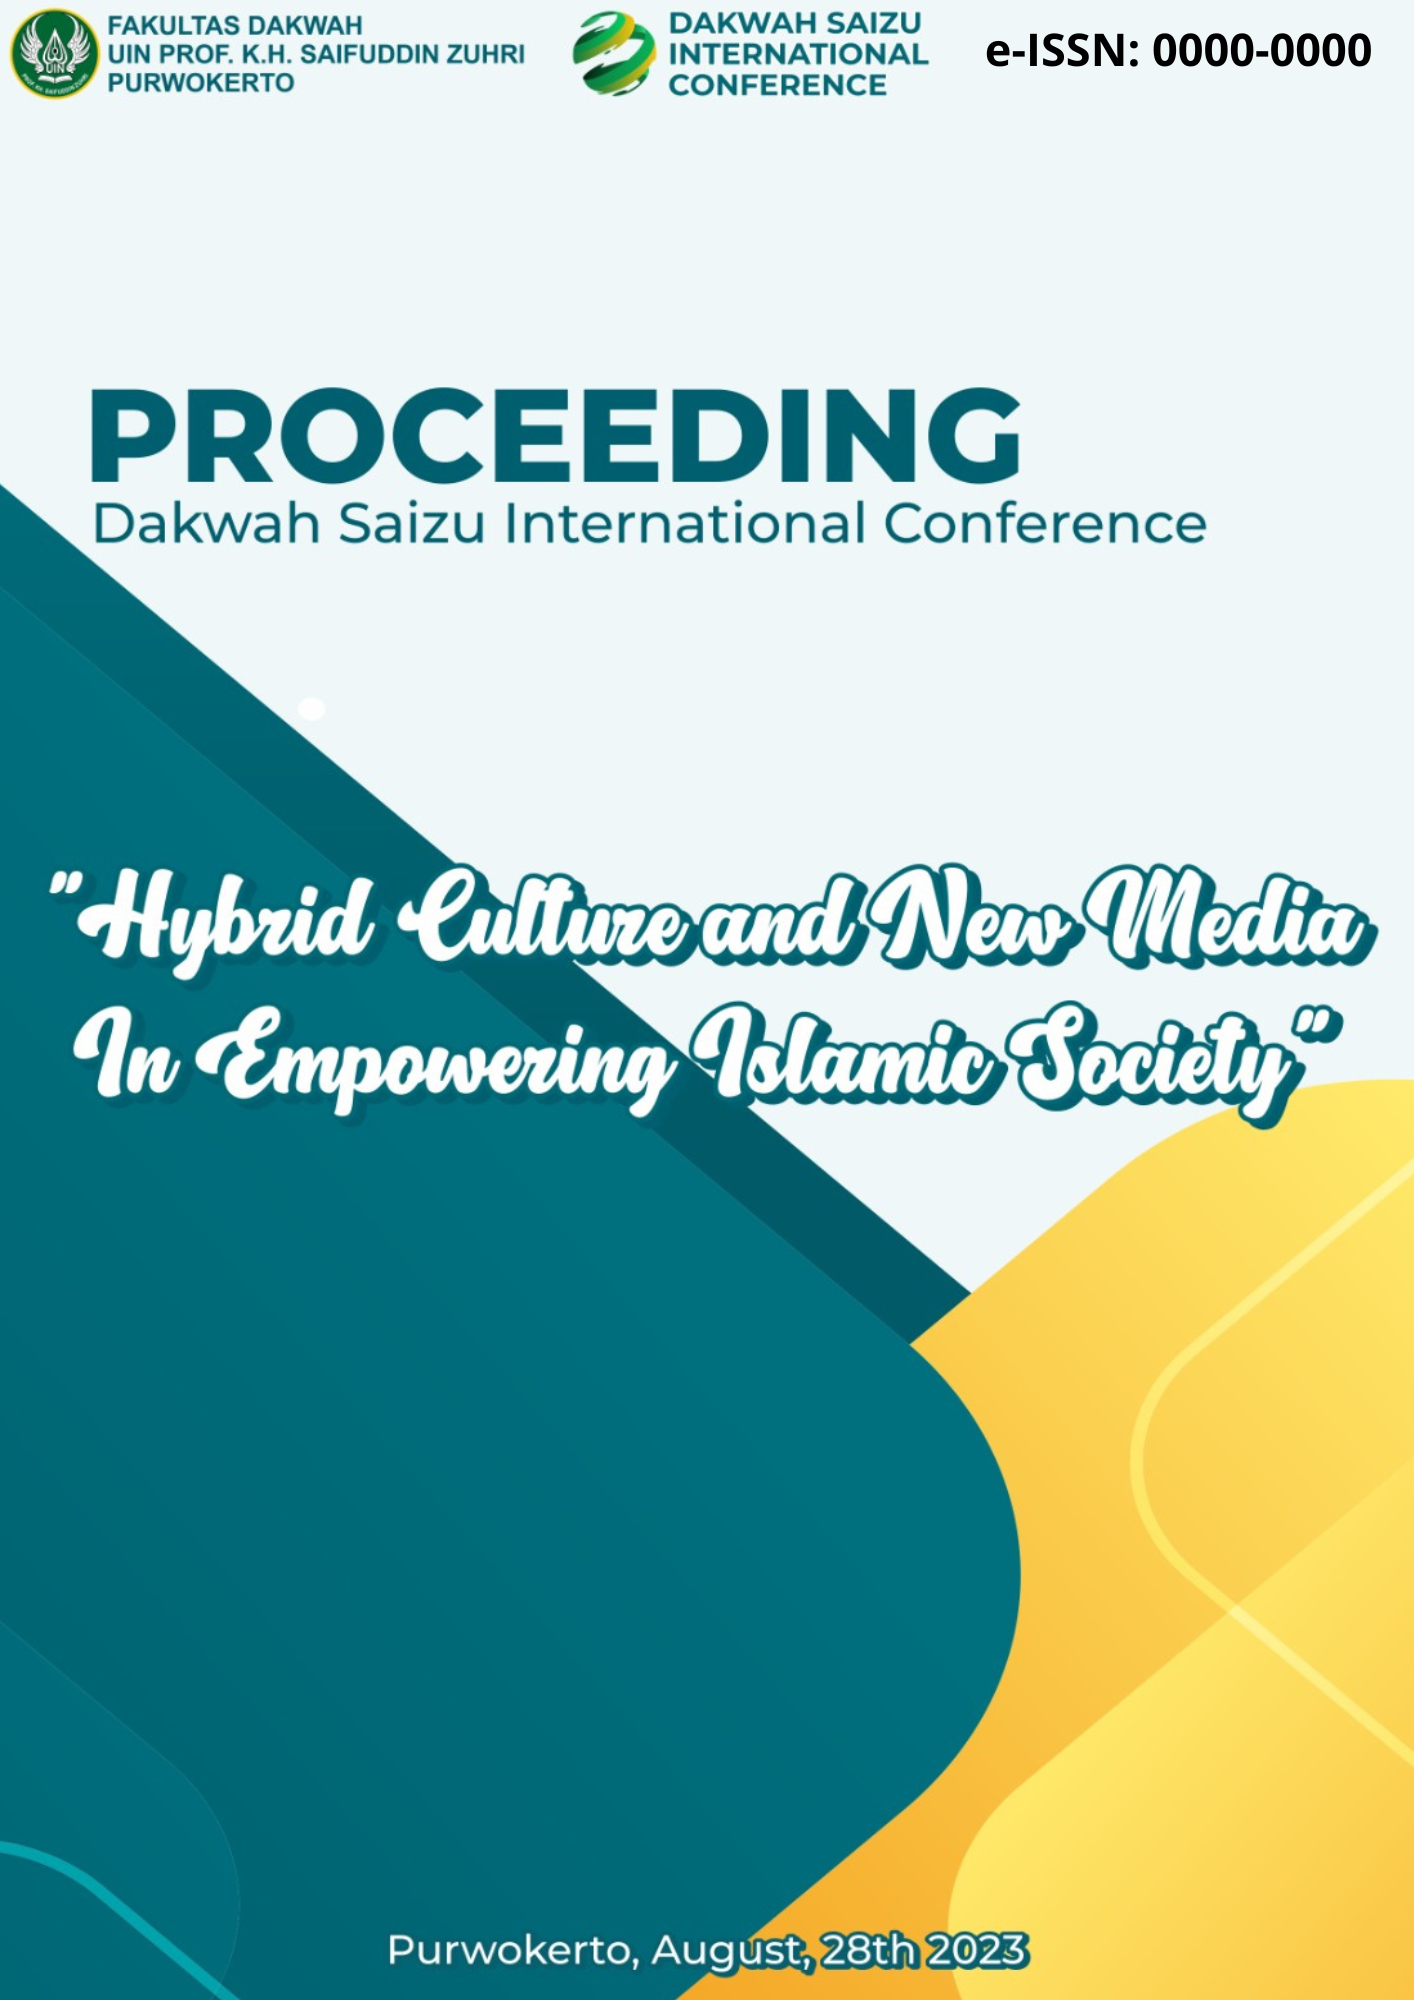                     View Vol. 1 No. 1 (2023): DAKWAH SAIZU INTERNATIONAL CONFERENCE PROCEEDING 
                